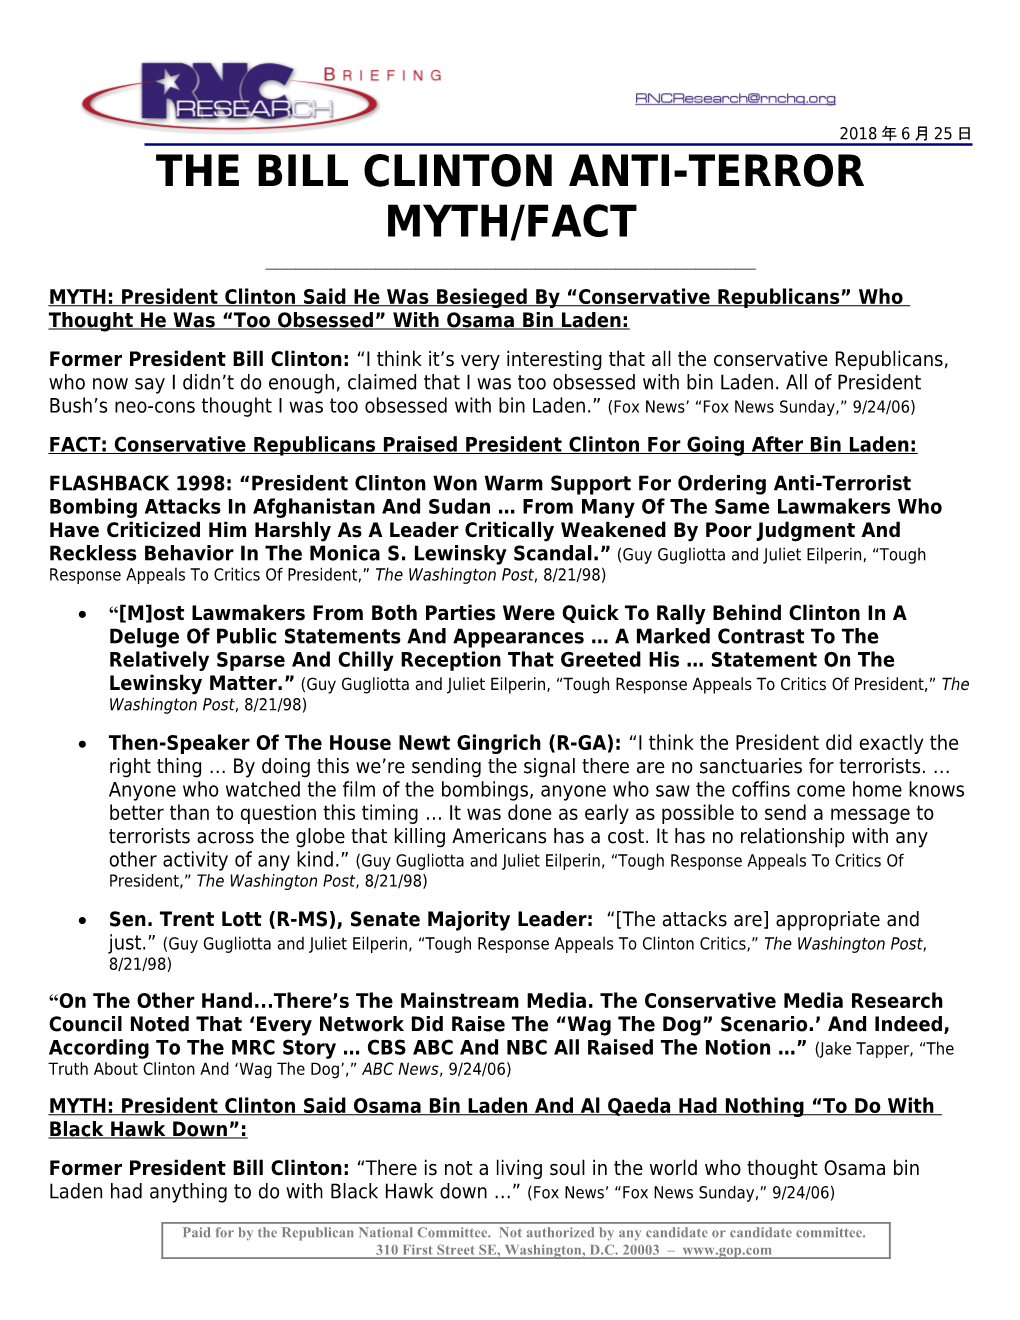 The Bill Clinton Anti-Terror Myth/Fact